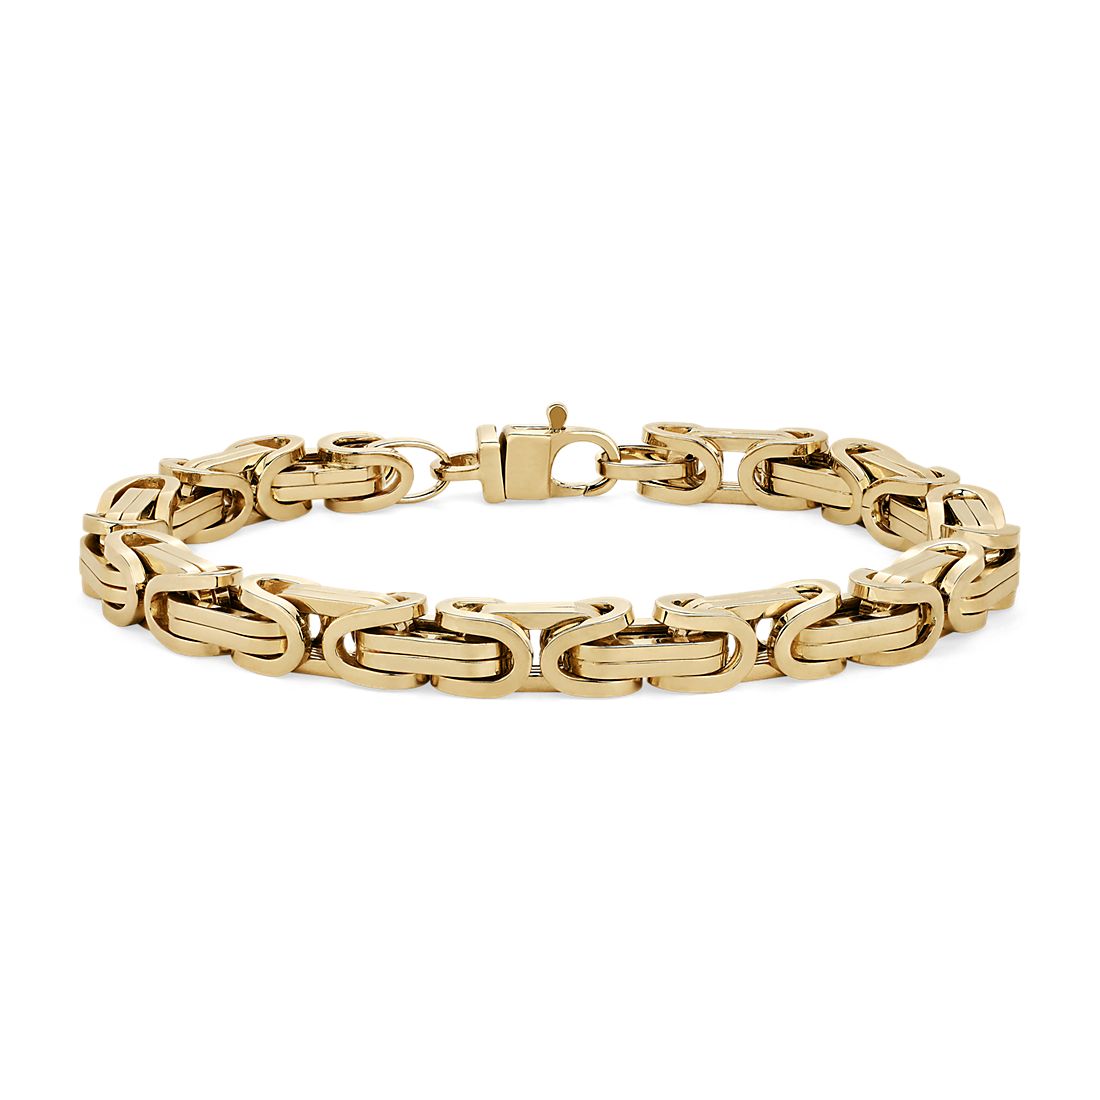 8" Men's Byzantine Chain Bracelet in 14k Yellow Gold (7 mm)